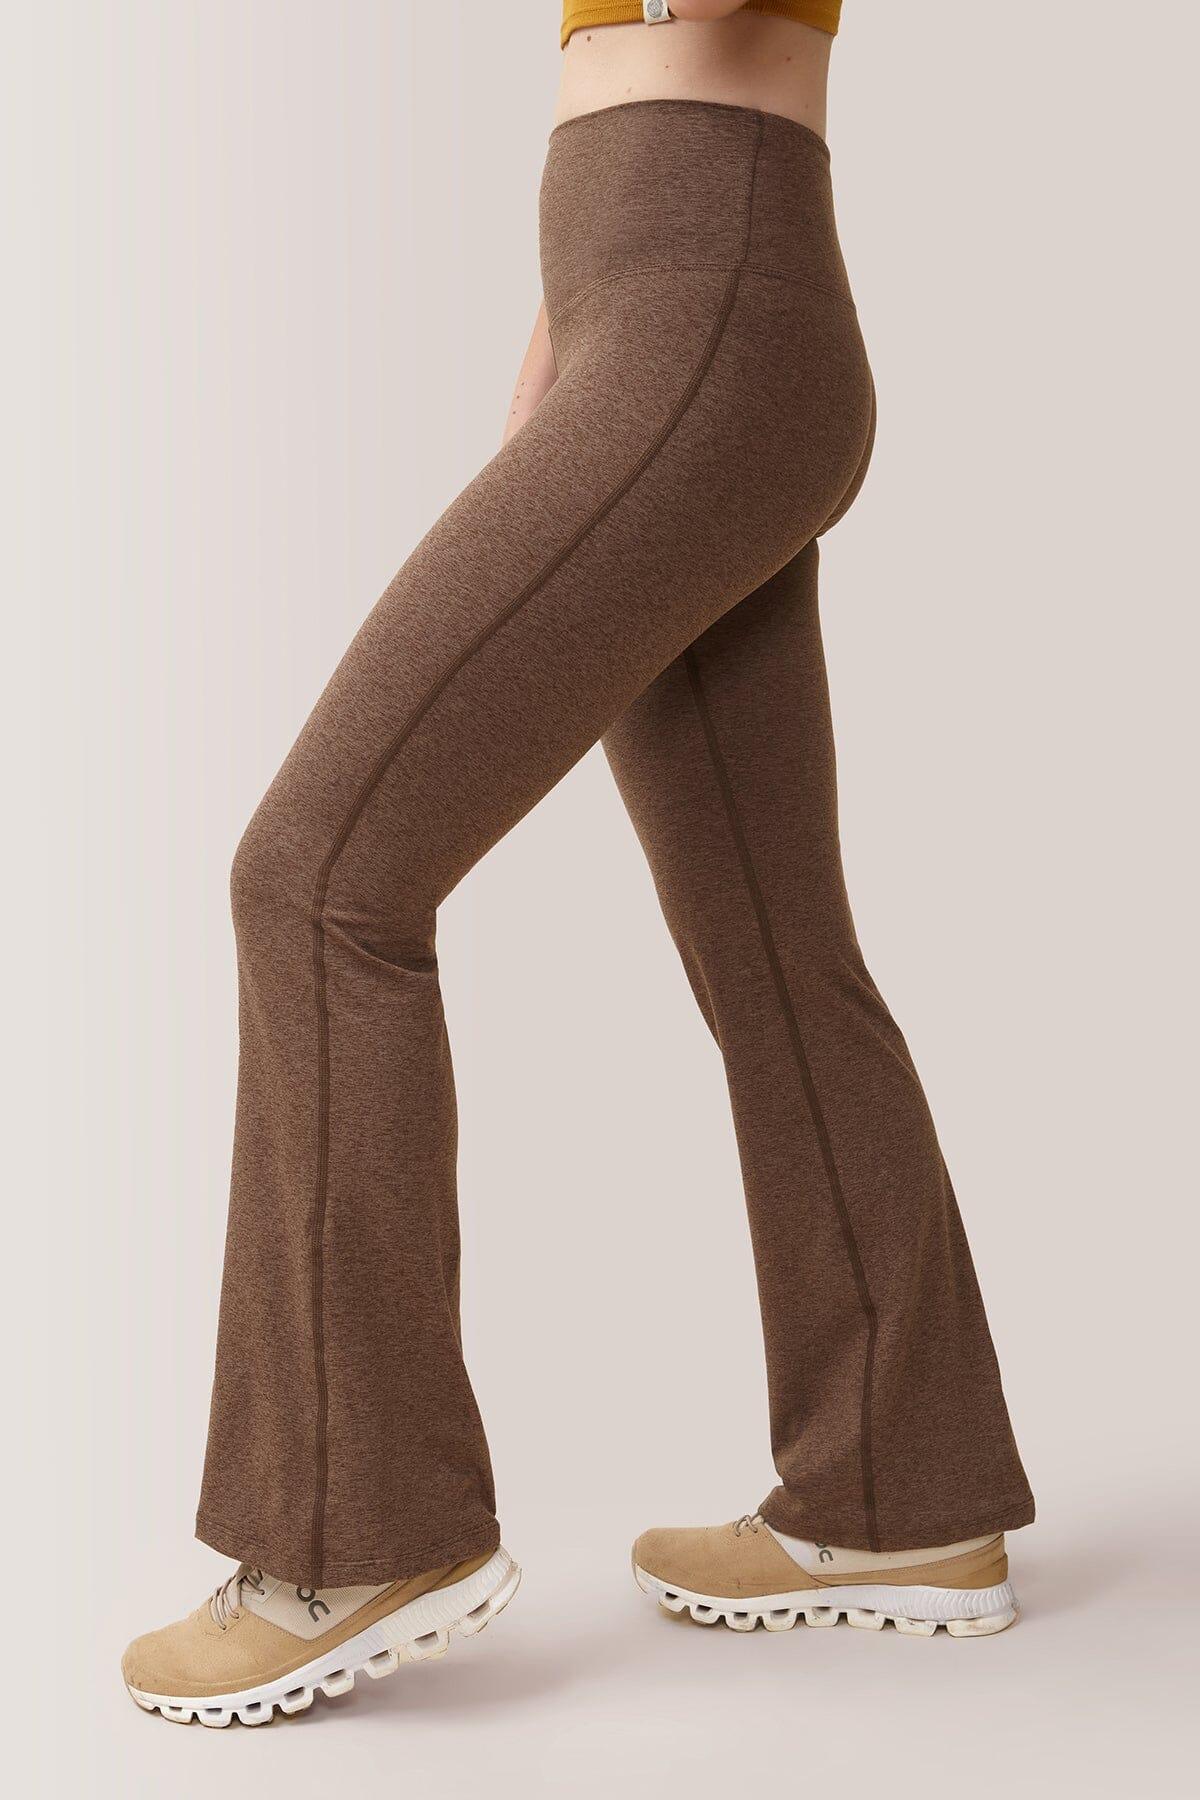 Femme qui porte les leggings TGIF de Rose Boreal./ Women wearing the TGIF Wide Leg Legging from Rose Boreal. -Truffle